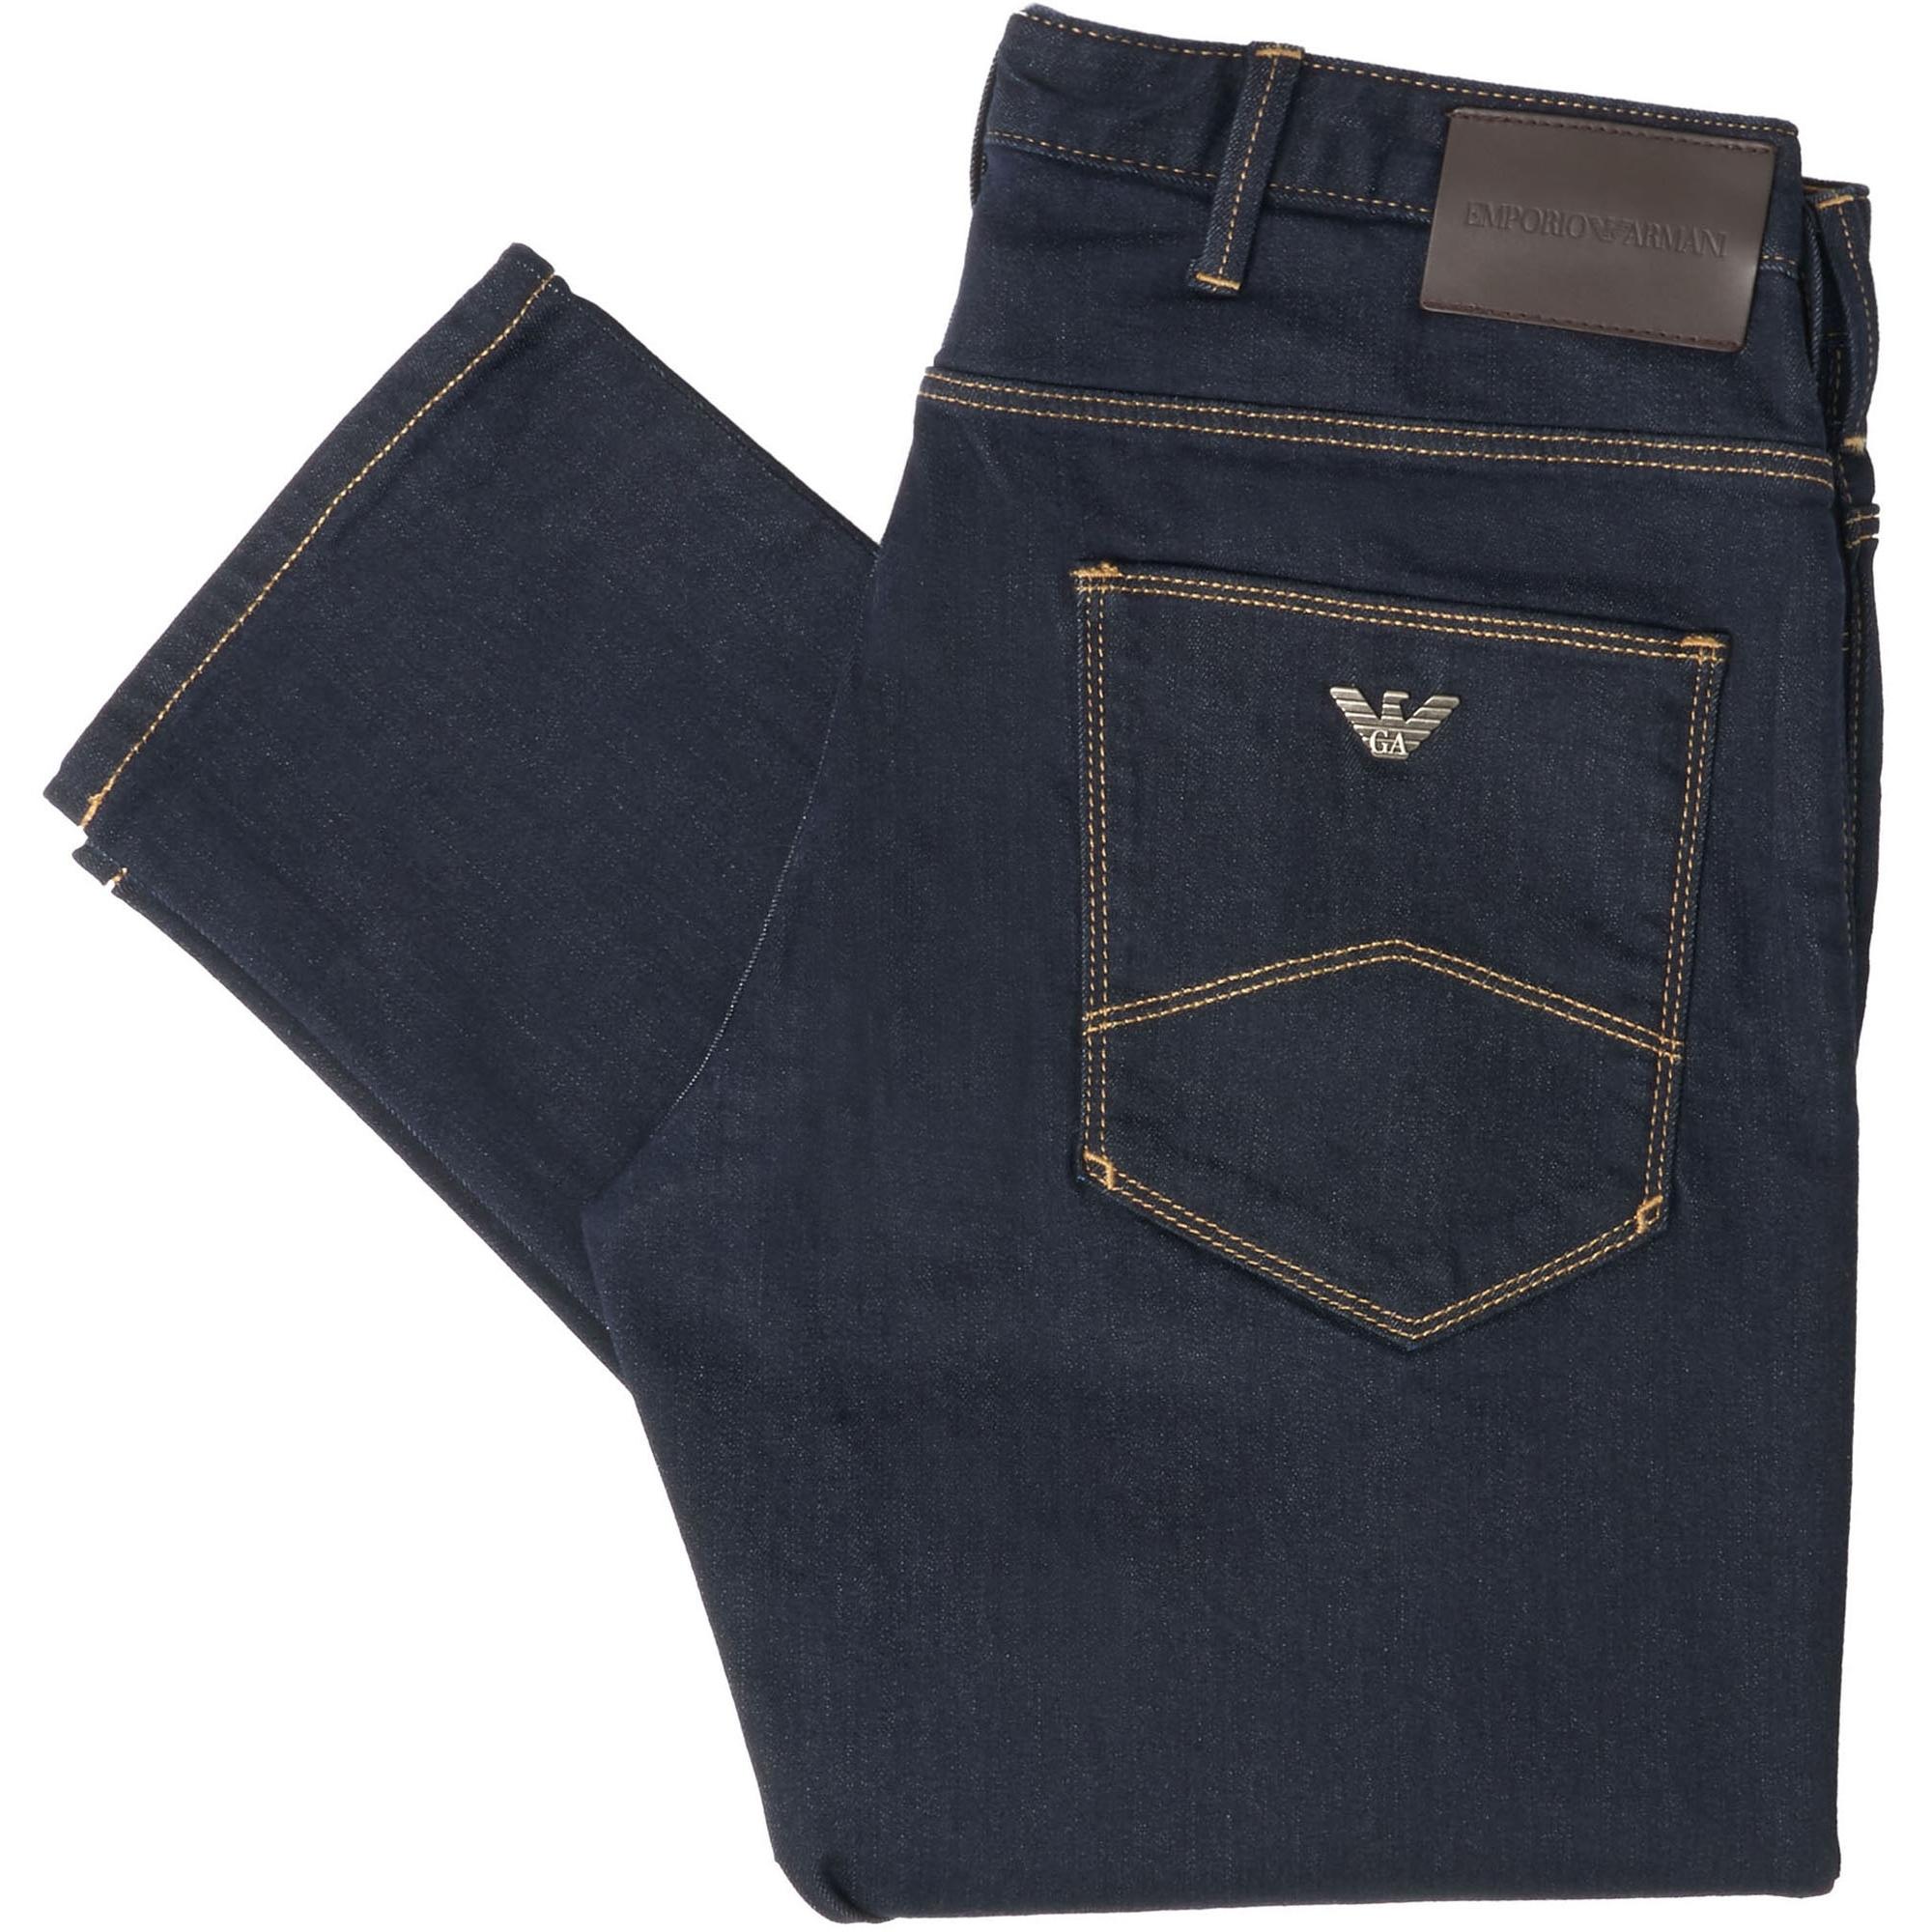 Emporio Armani J06 Slim Fit Denim Jeans in Blue for Men - Save 11% - Lyst